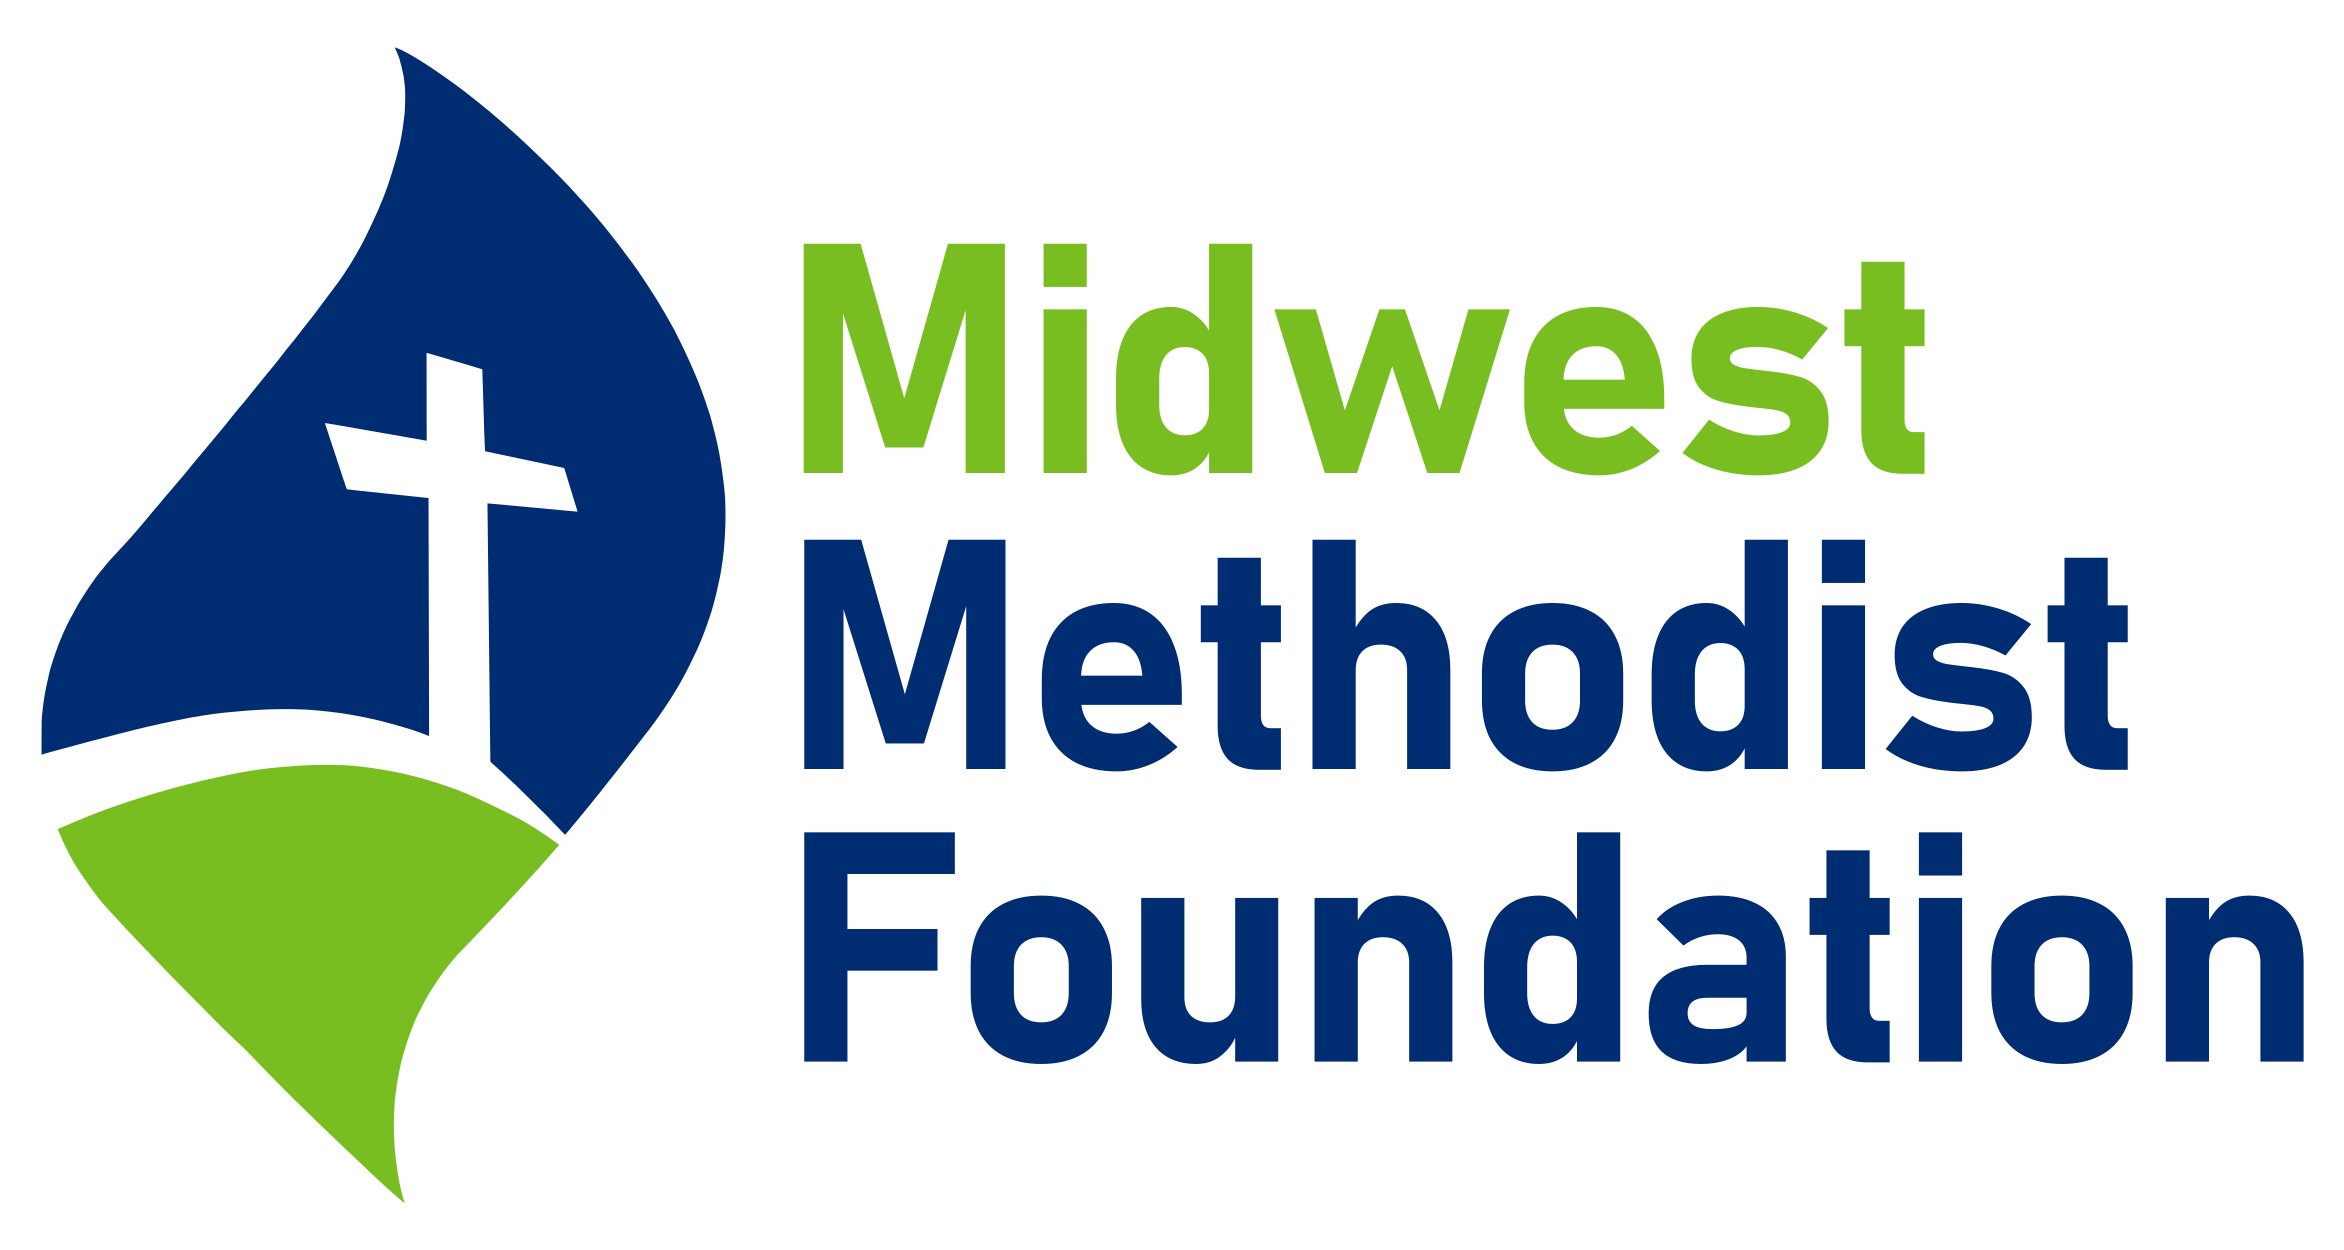 Midwest Methodist Foundation